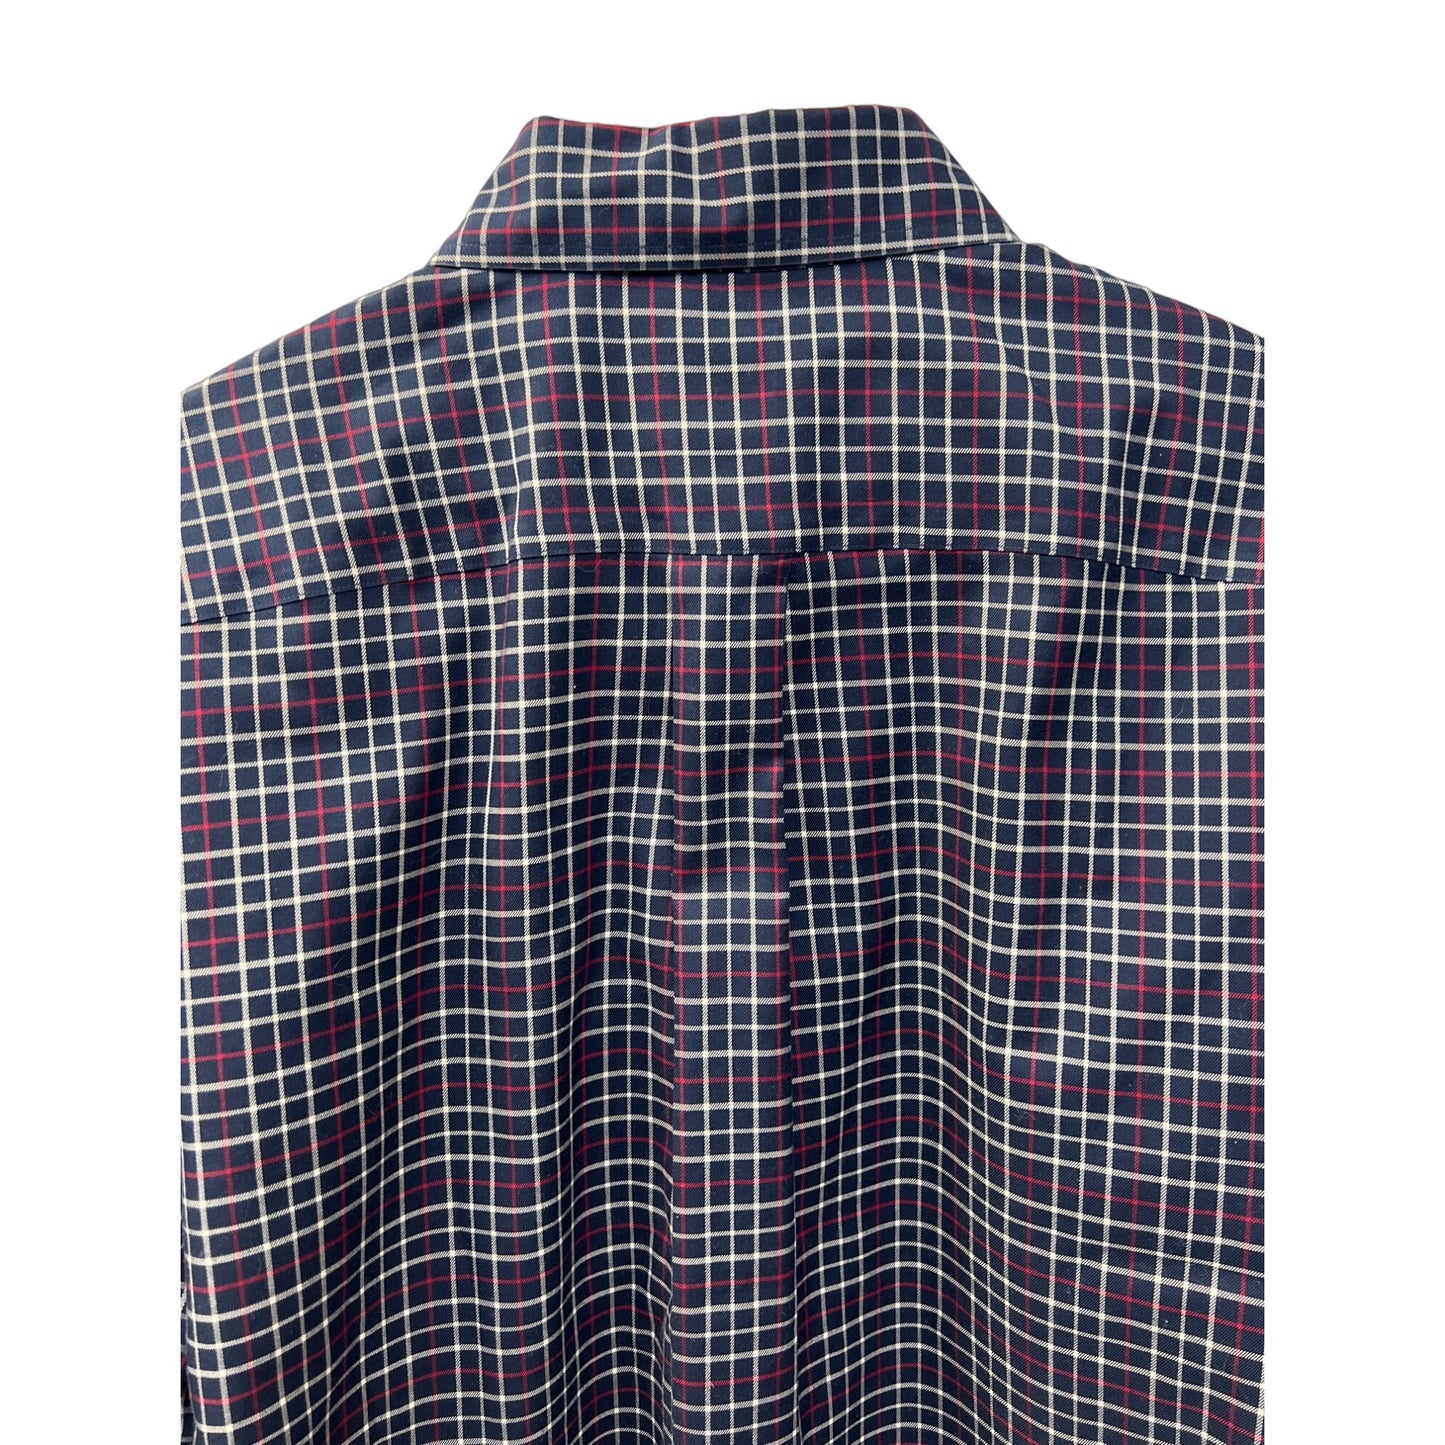 Brooks Brothers The Original Polo Shirt Long Sleeve Plaid Button Down Shirt